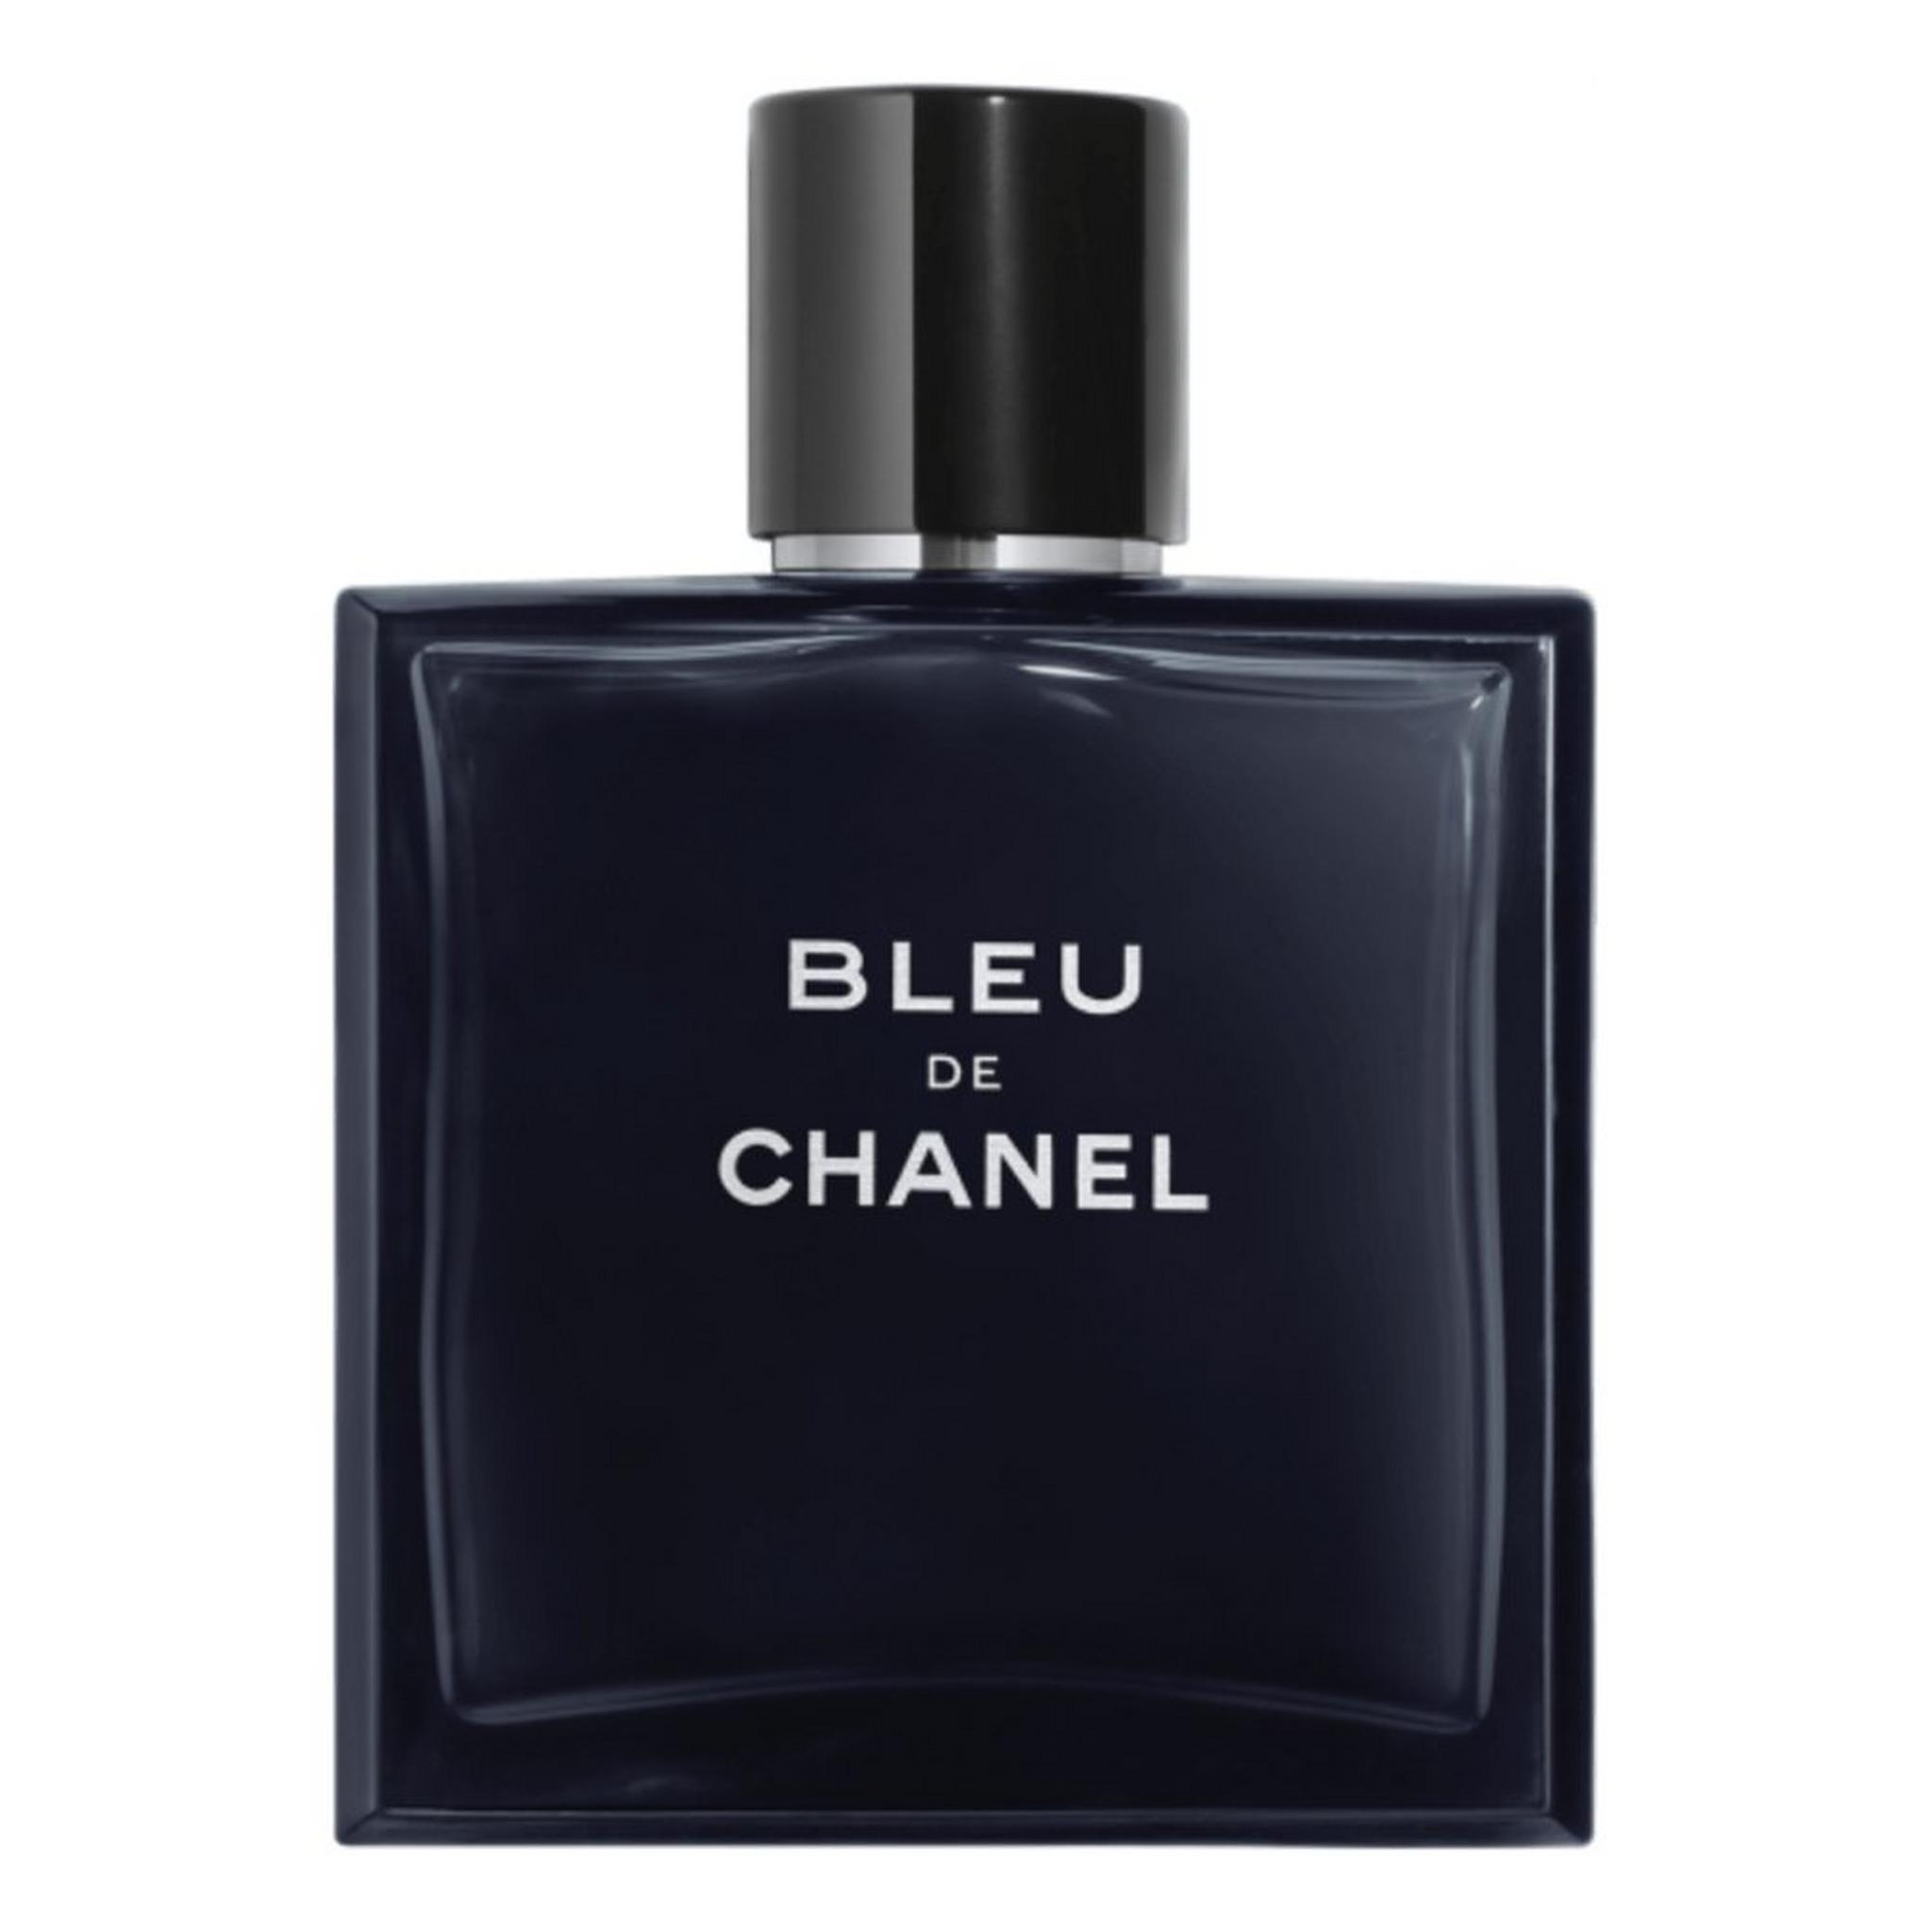 Blue de Chanel by Chanel for Men 100 ml Eau de toilette